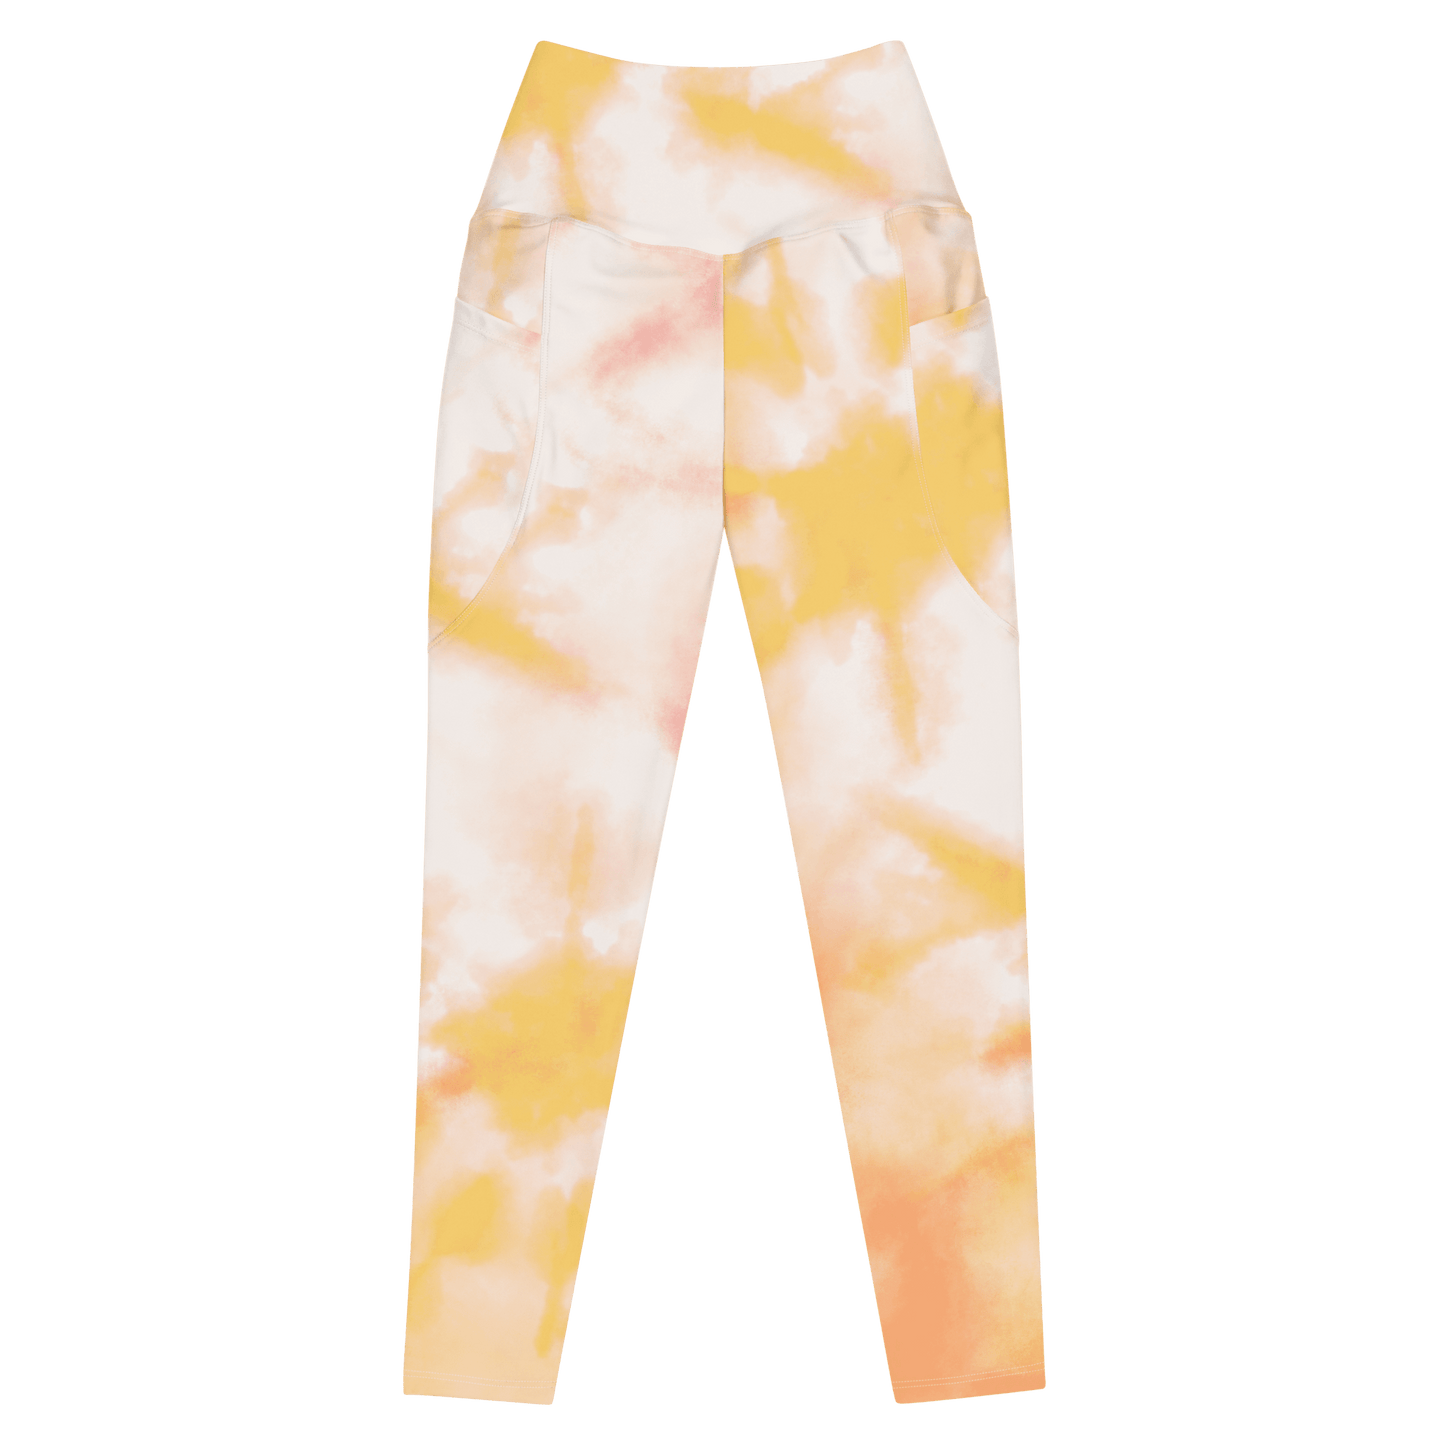 Yellow Tie Dye Leggings with Pockets - L & M Kee, LLC